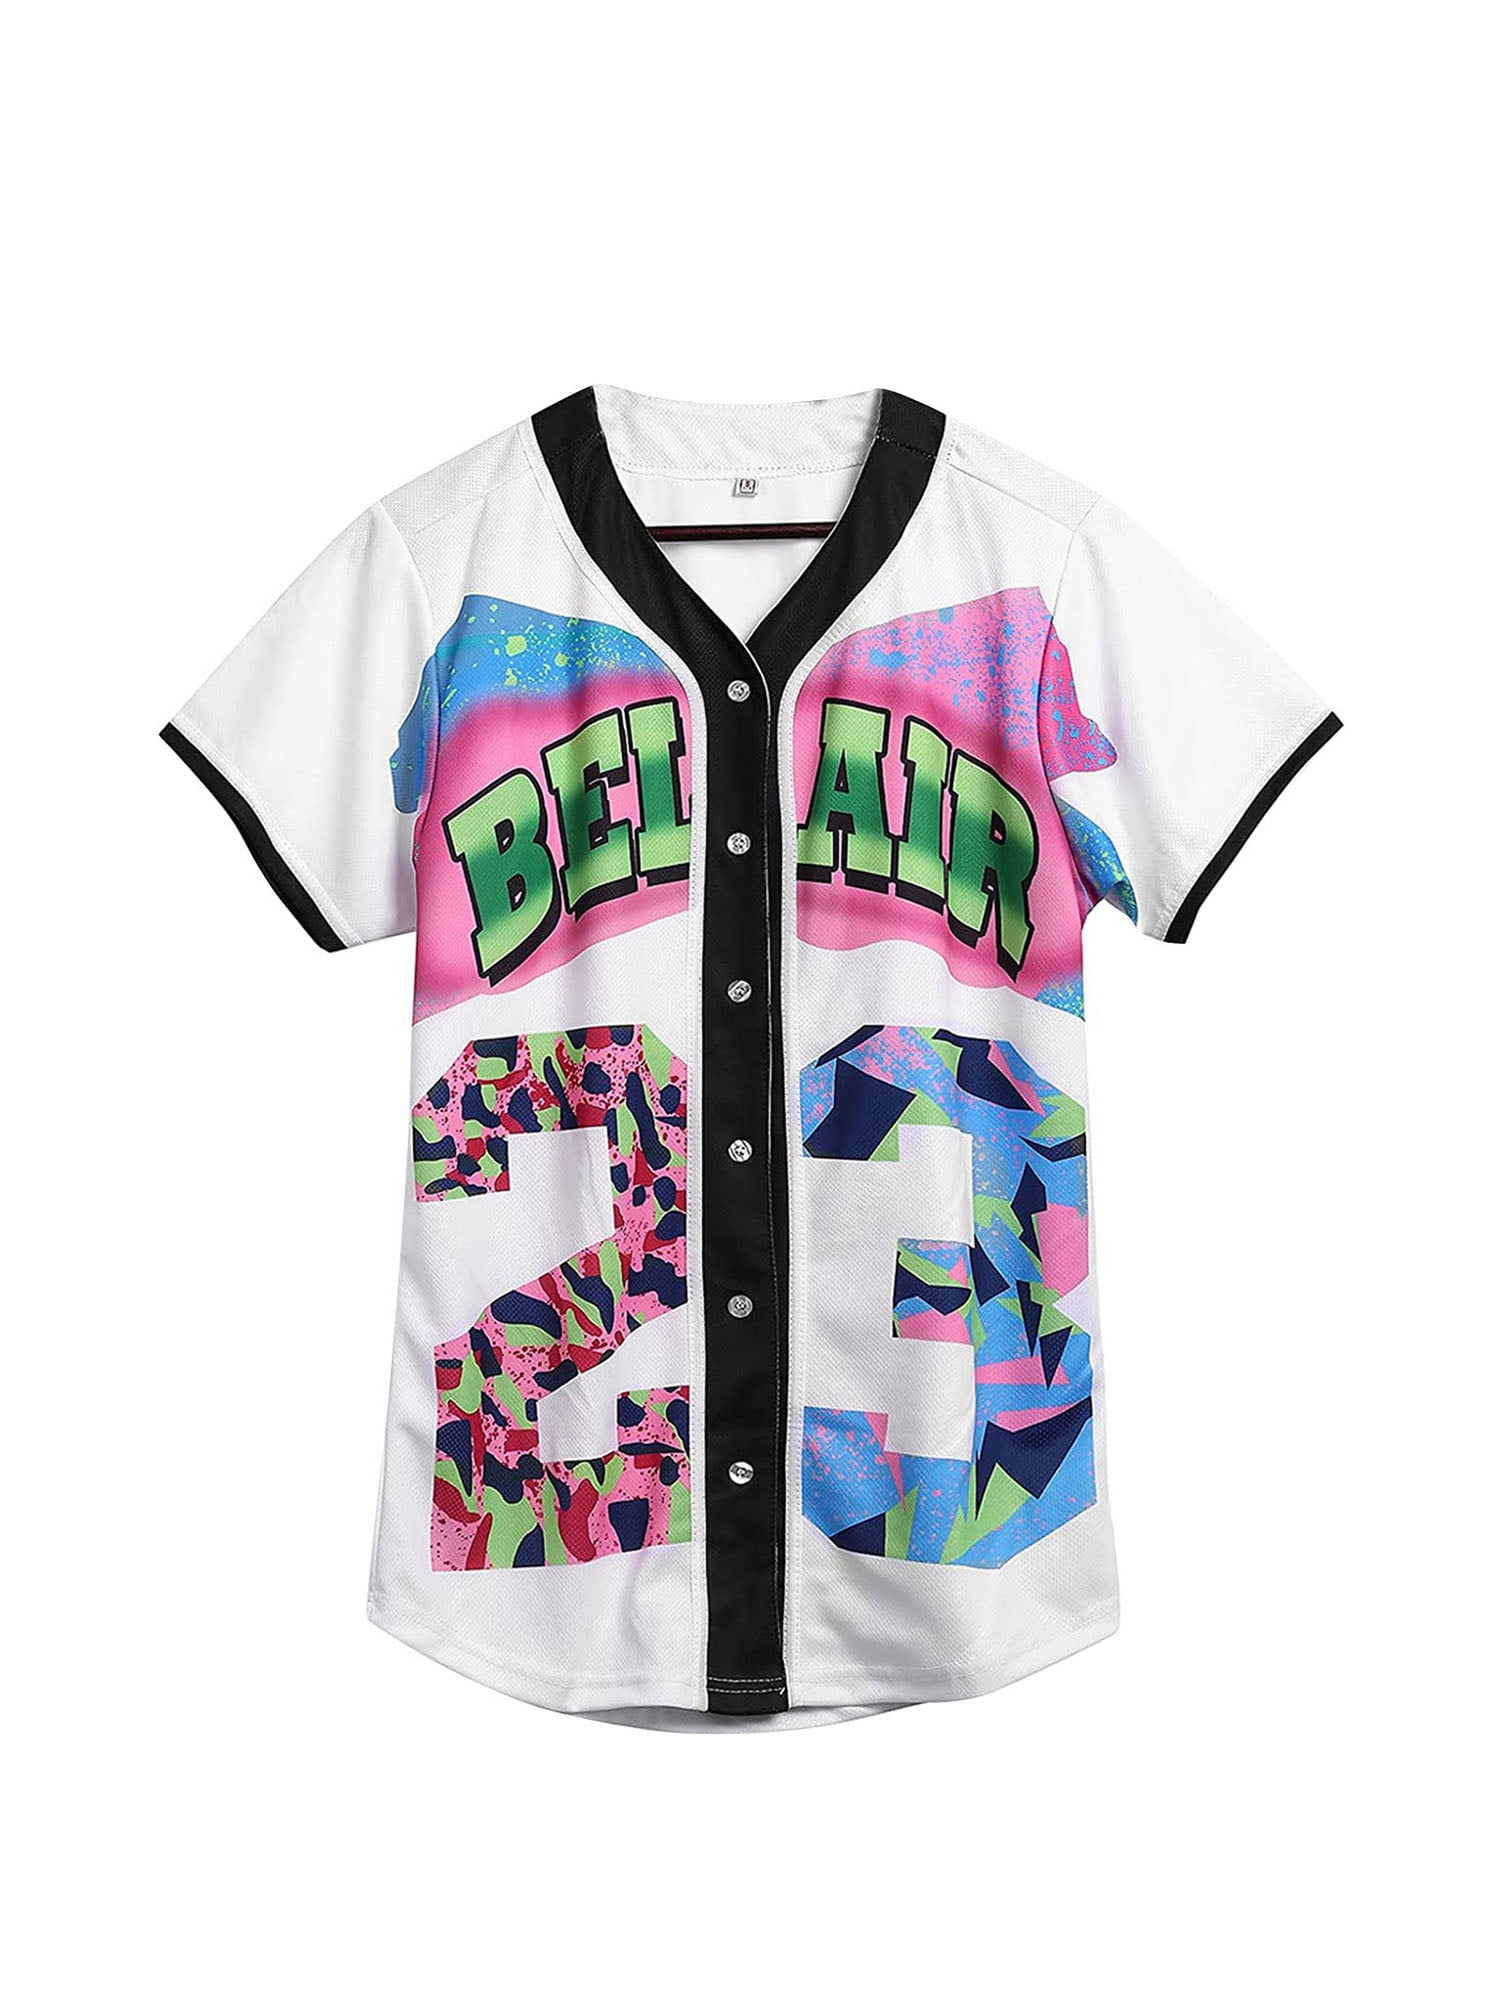 Unisex 90s Theme Party Hip Hop Bel Air Baseball Uniform for Women Jersey  Short Sleeve Tops